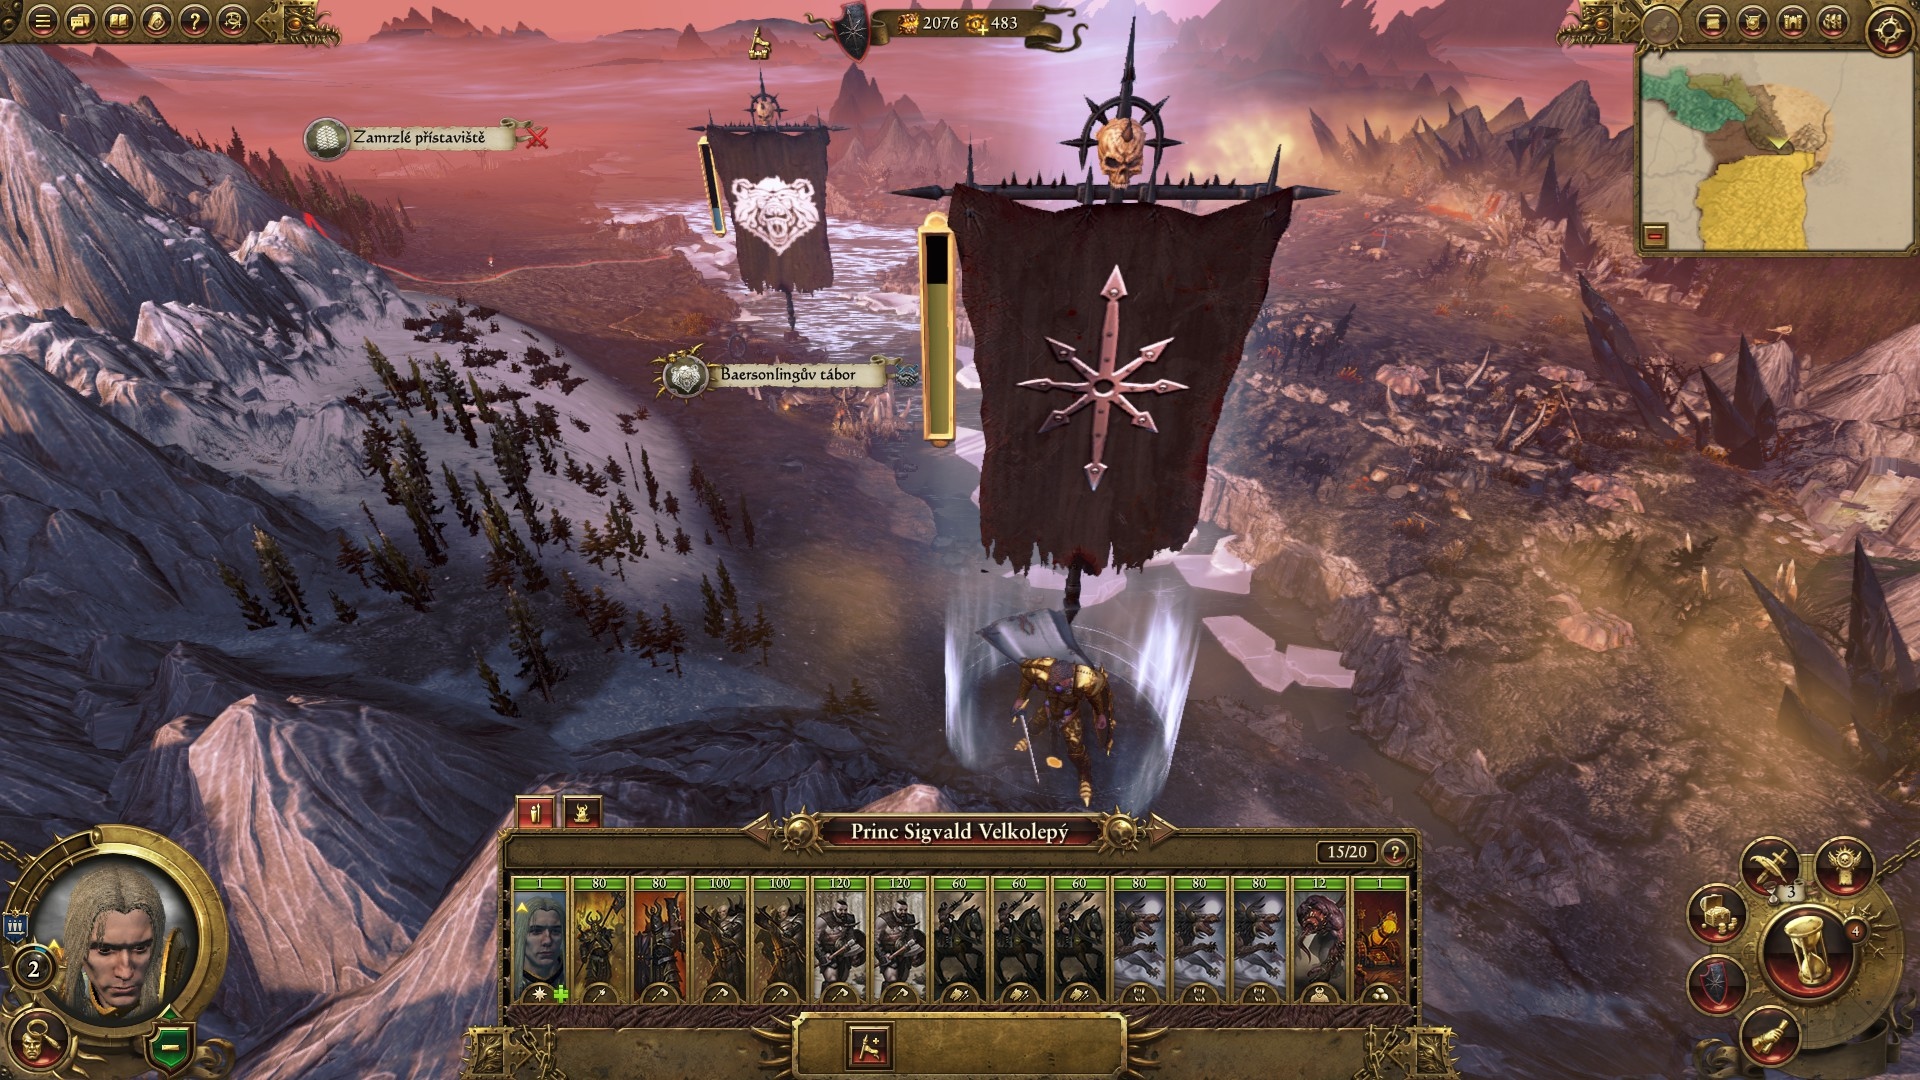 Total War: Warhammer Chaos neme vlastni mest, navye m vea nepriateov, ale  v dobytom sdle doke obnovi kme, z ktorho sa stane spojenec.